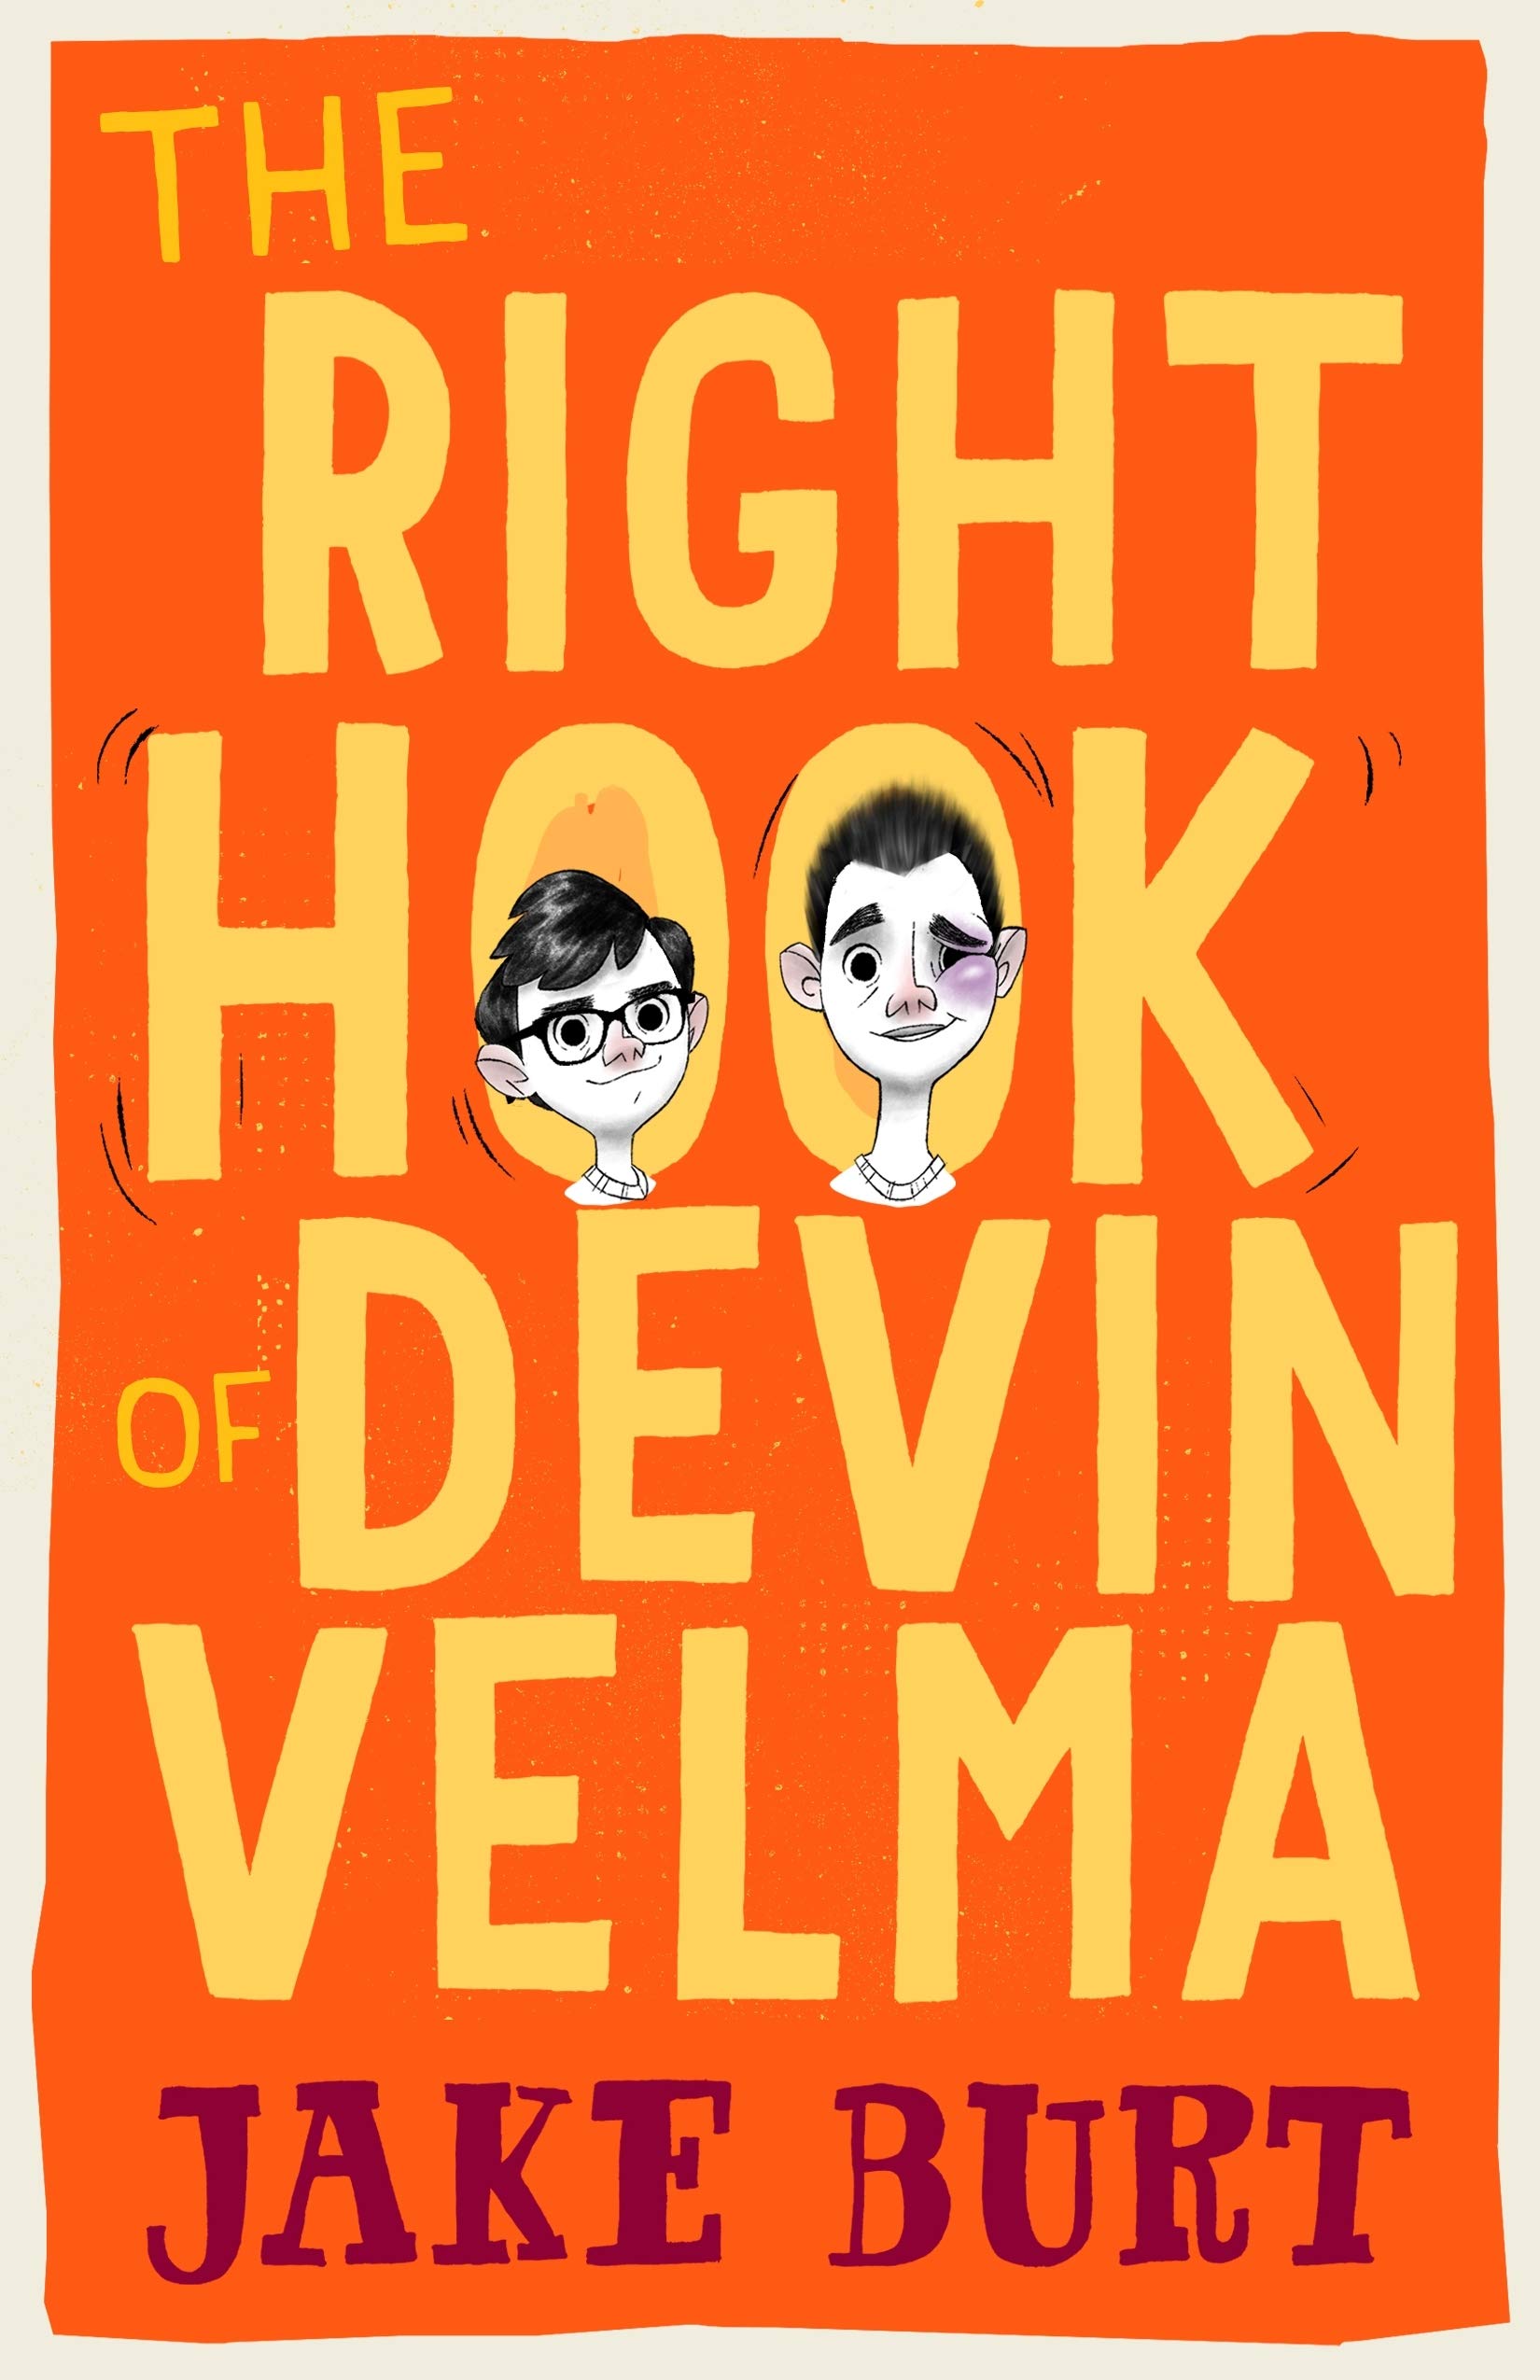 The Right Hook of Devin Velma by Jake Burt